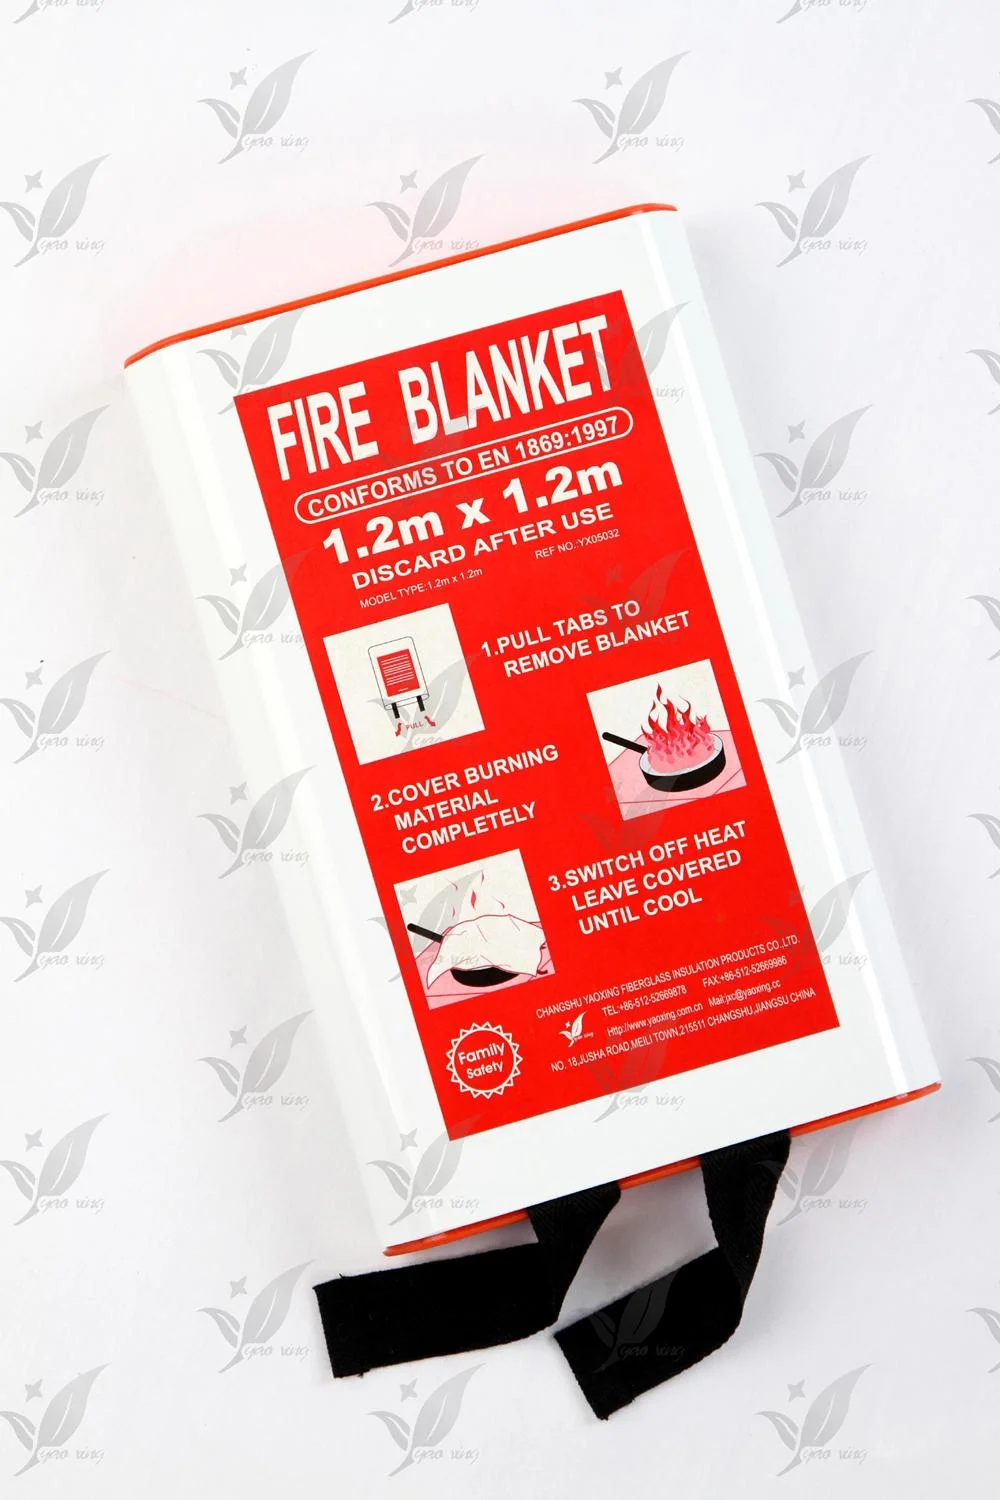 Kitchen Blanket for Fire Fighting Fire Blanket